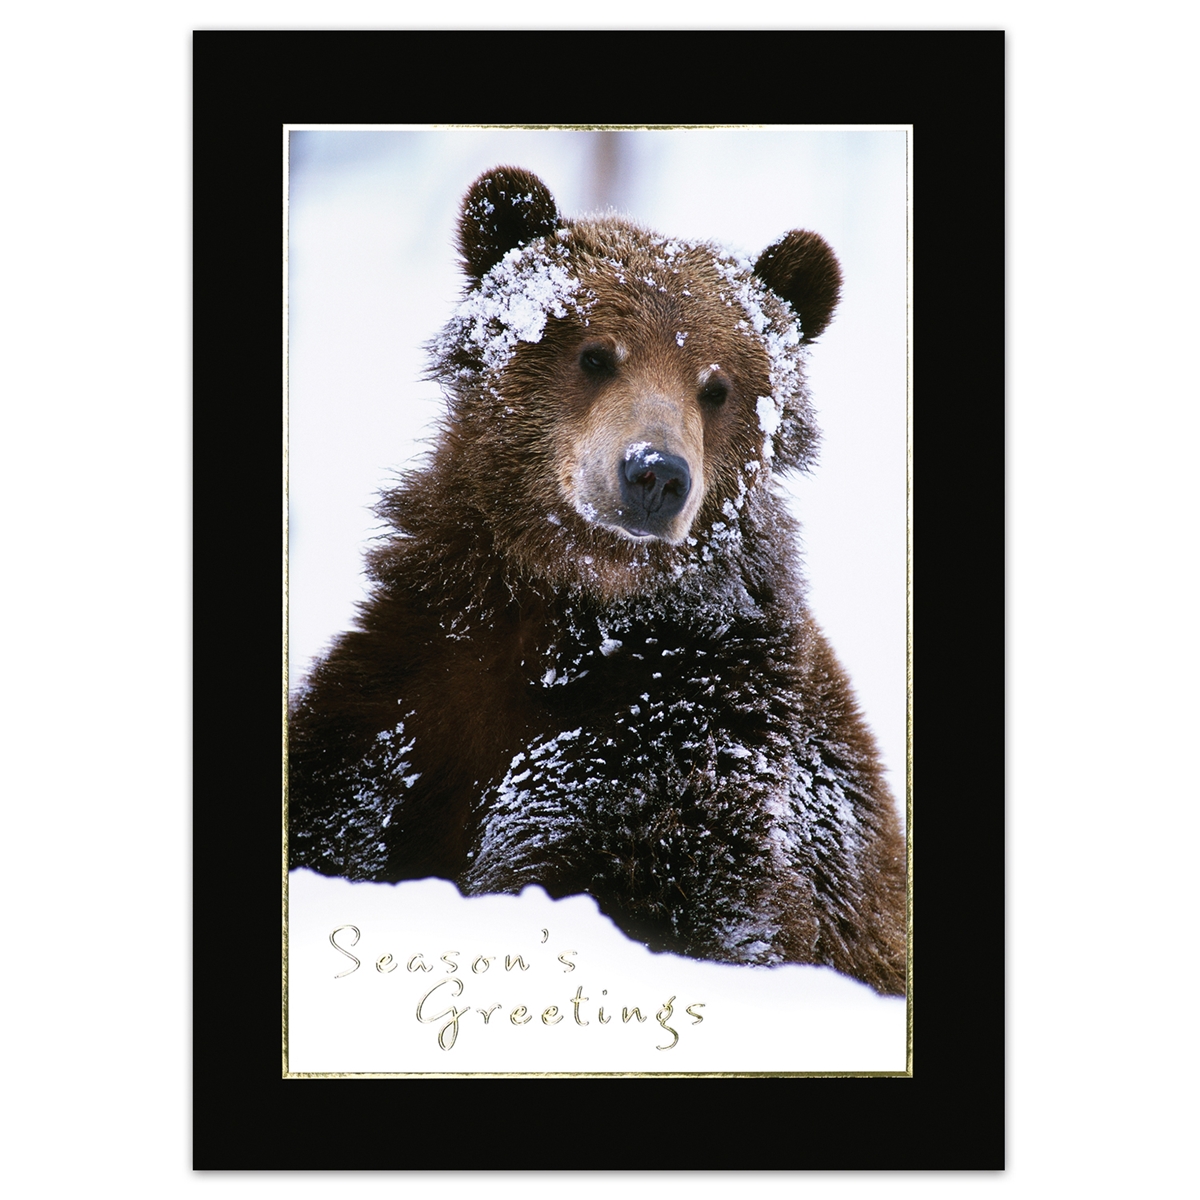 Snowy Grizzly Card